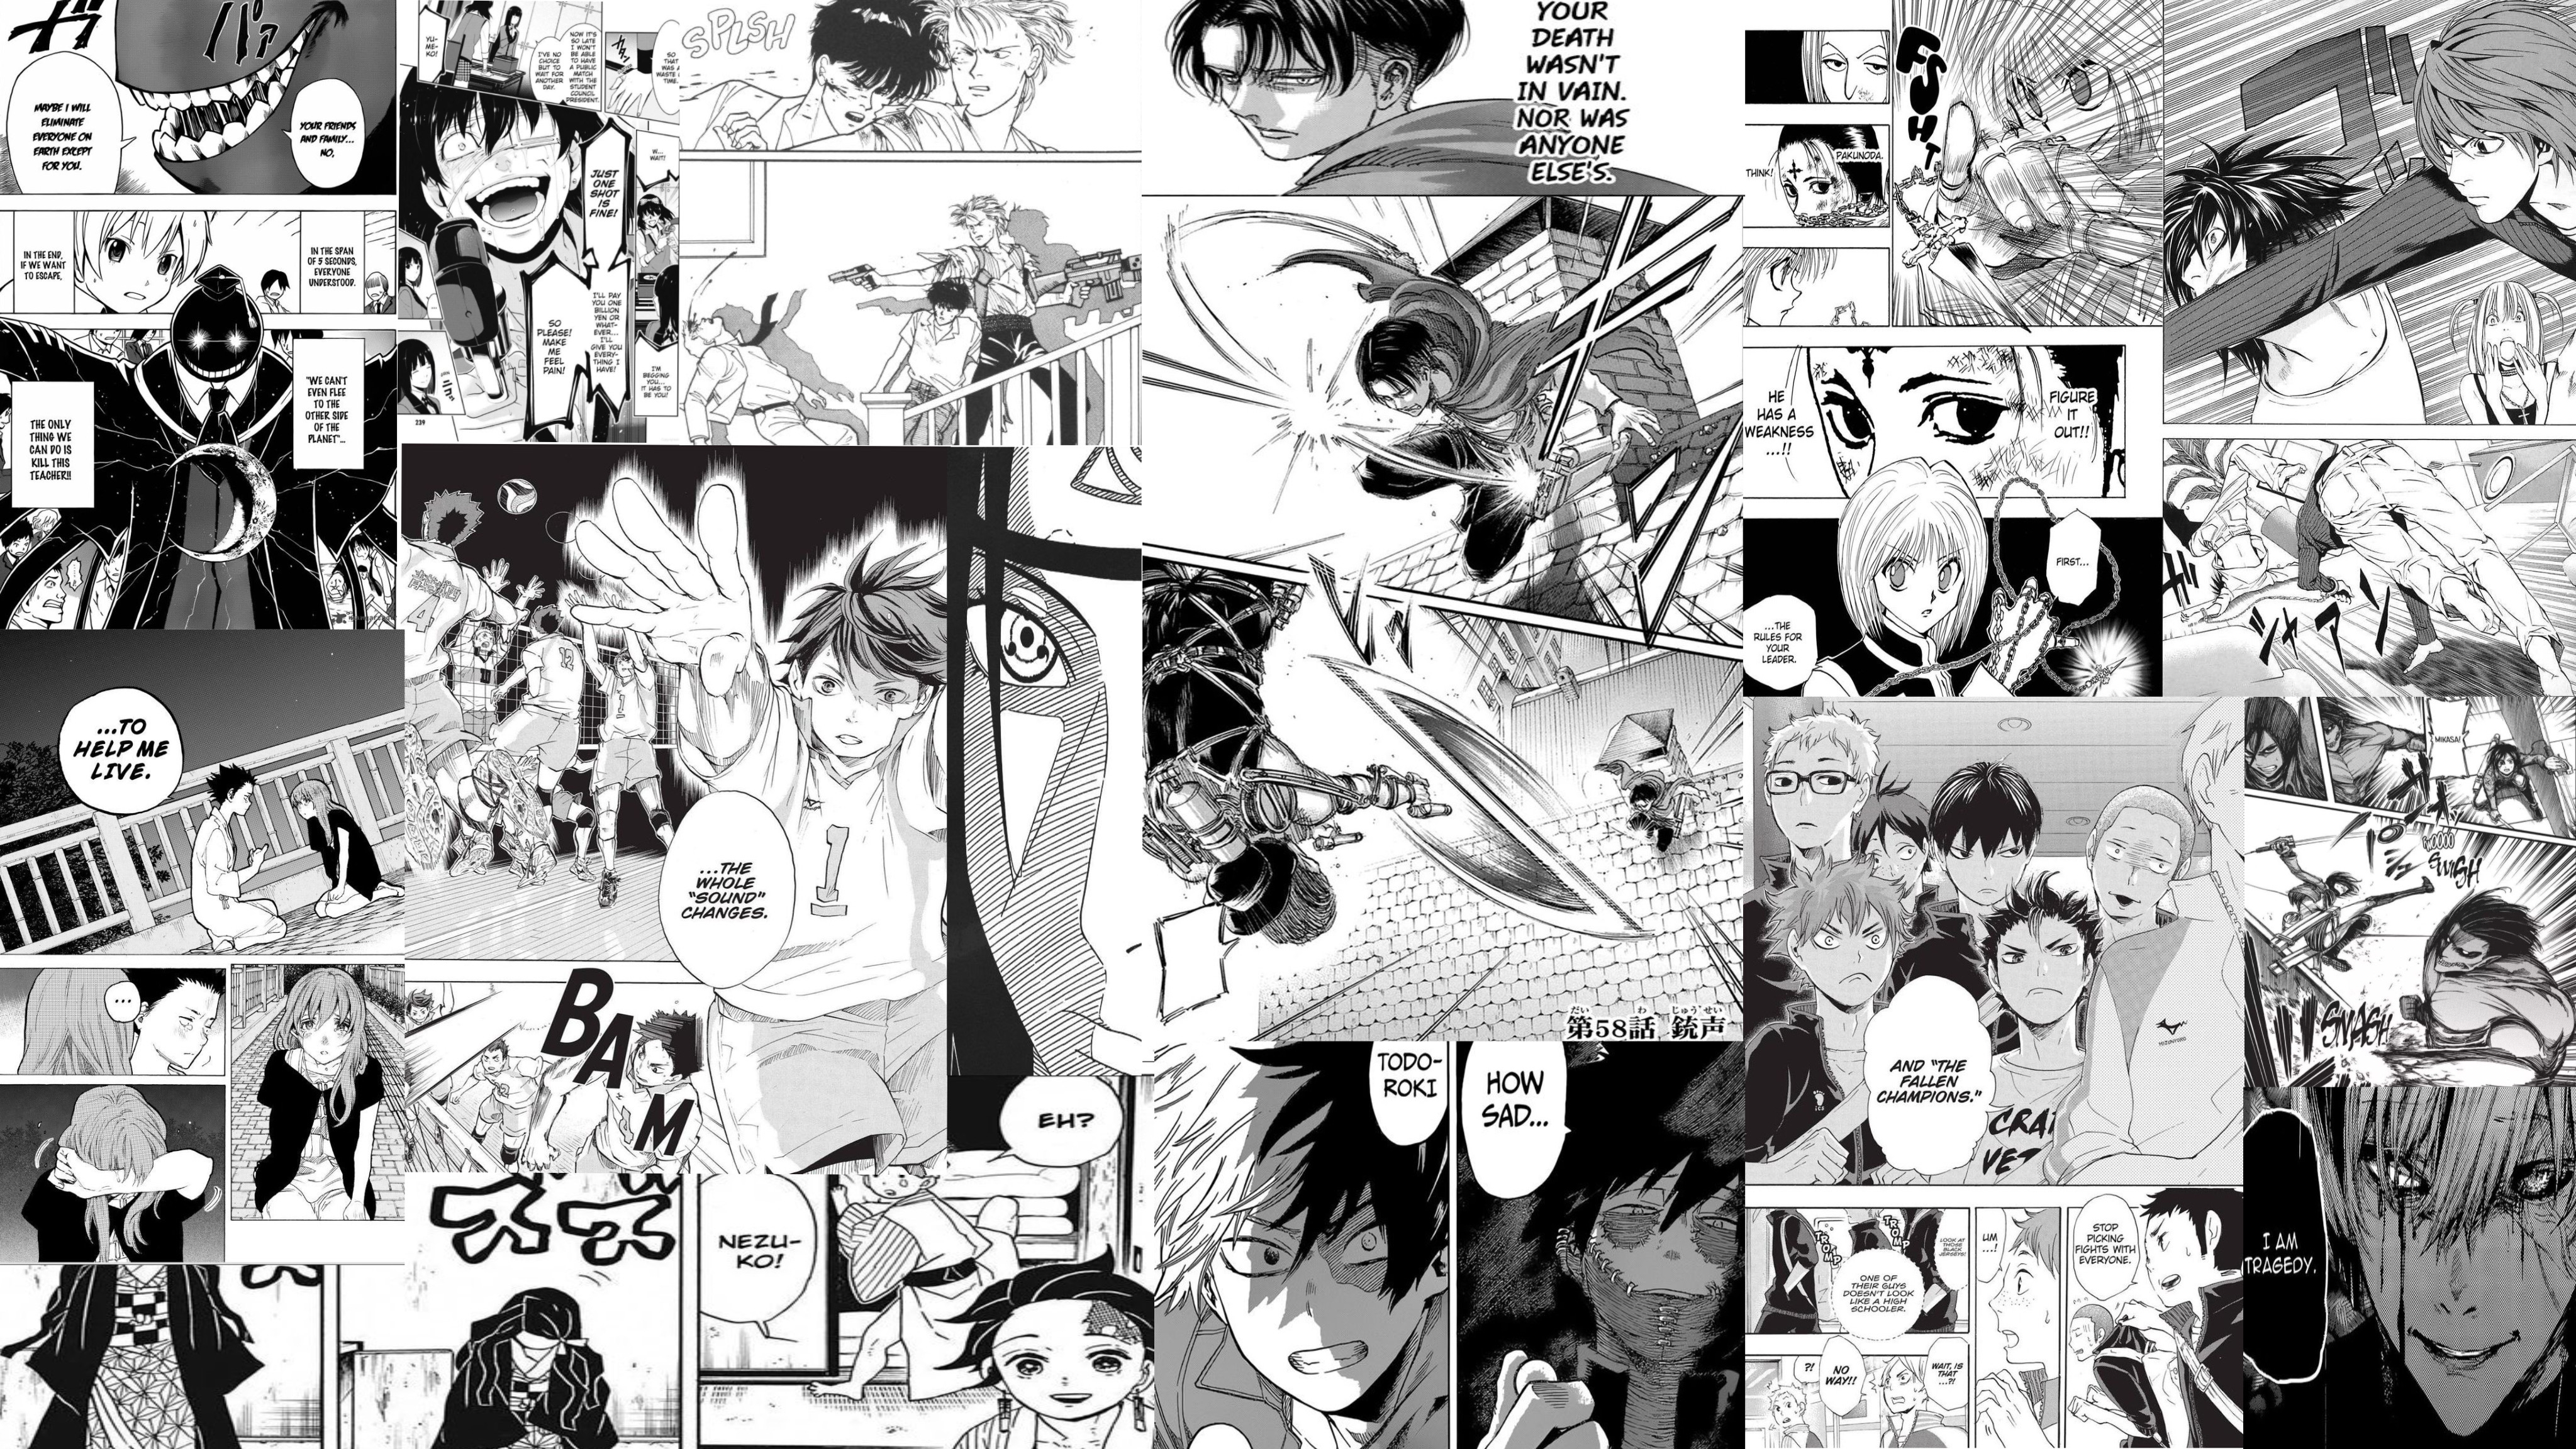 Manga: Telling stories frame by frame